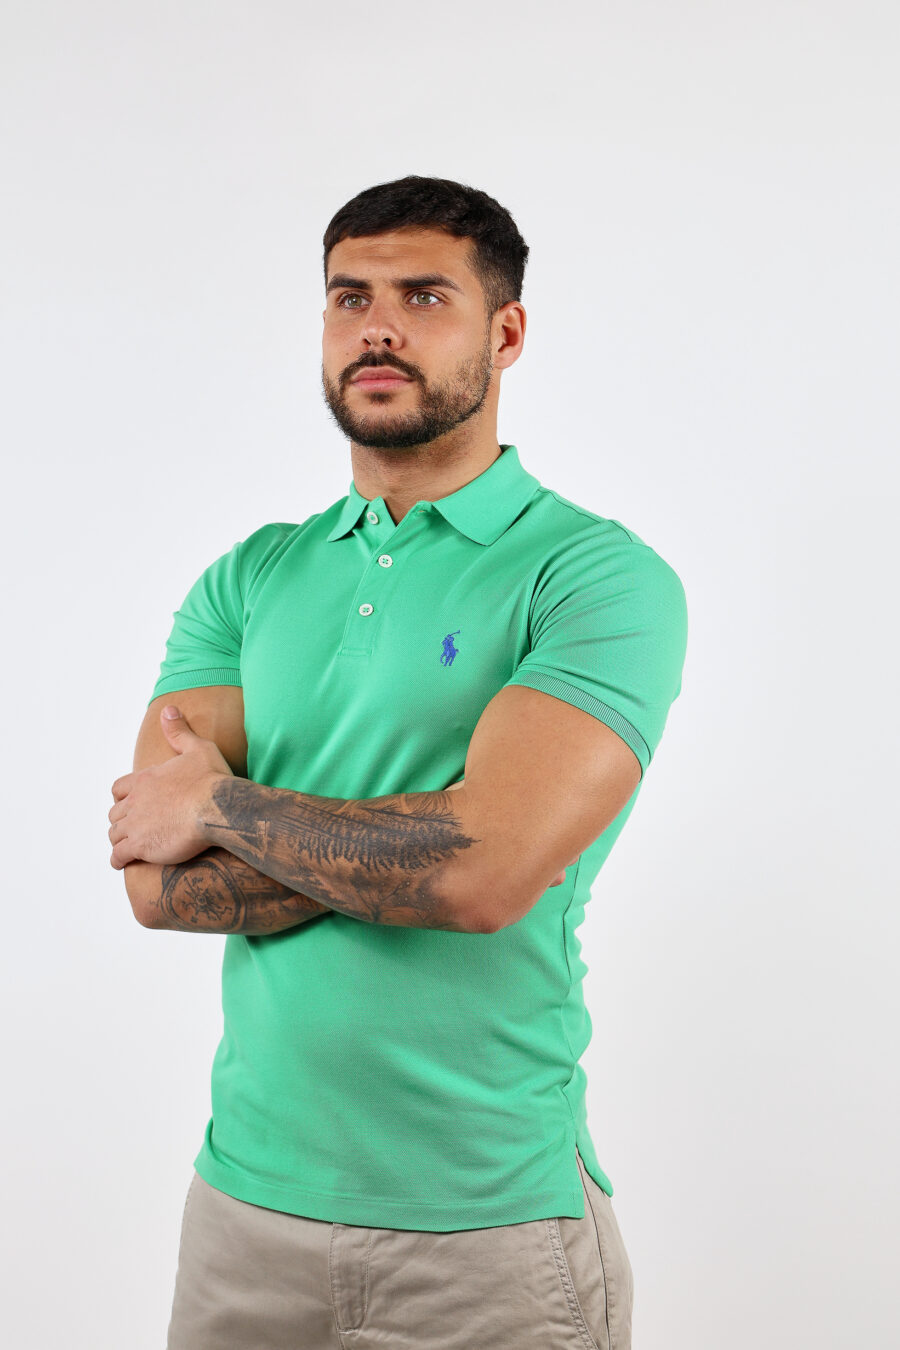 T-shirt vert et bleu avec mini-logo "polo" - BLS Fashion 172